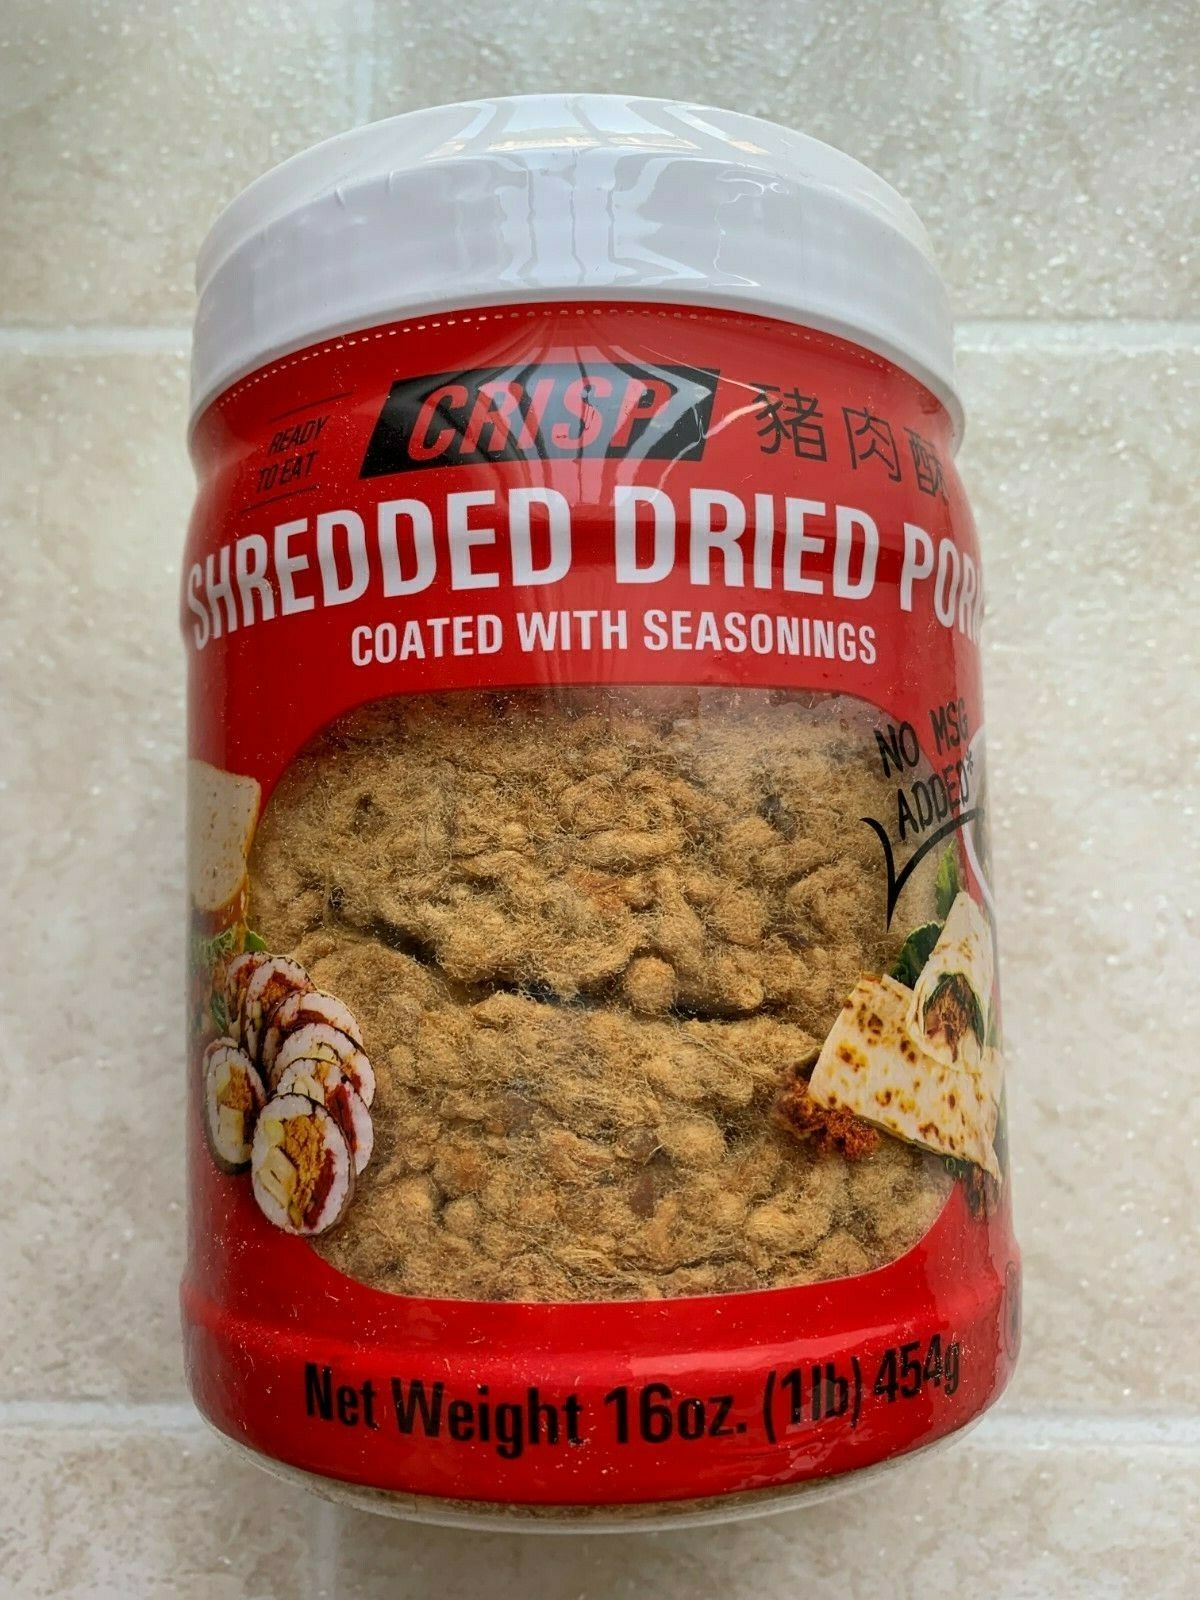 Ready To Eat Crisp Shredded Dried Pork No Msg 16oz Made In Canada